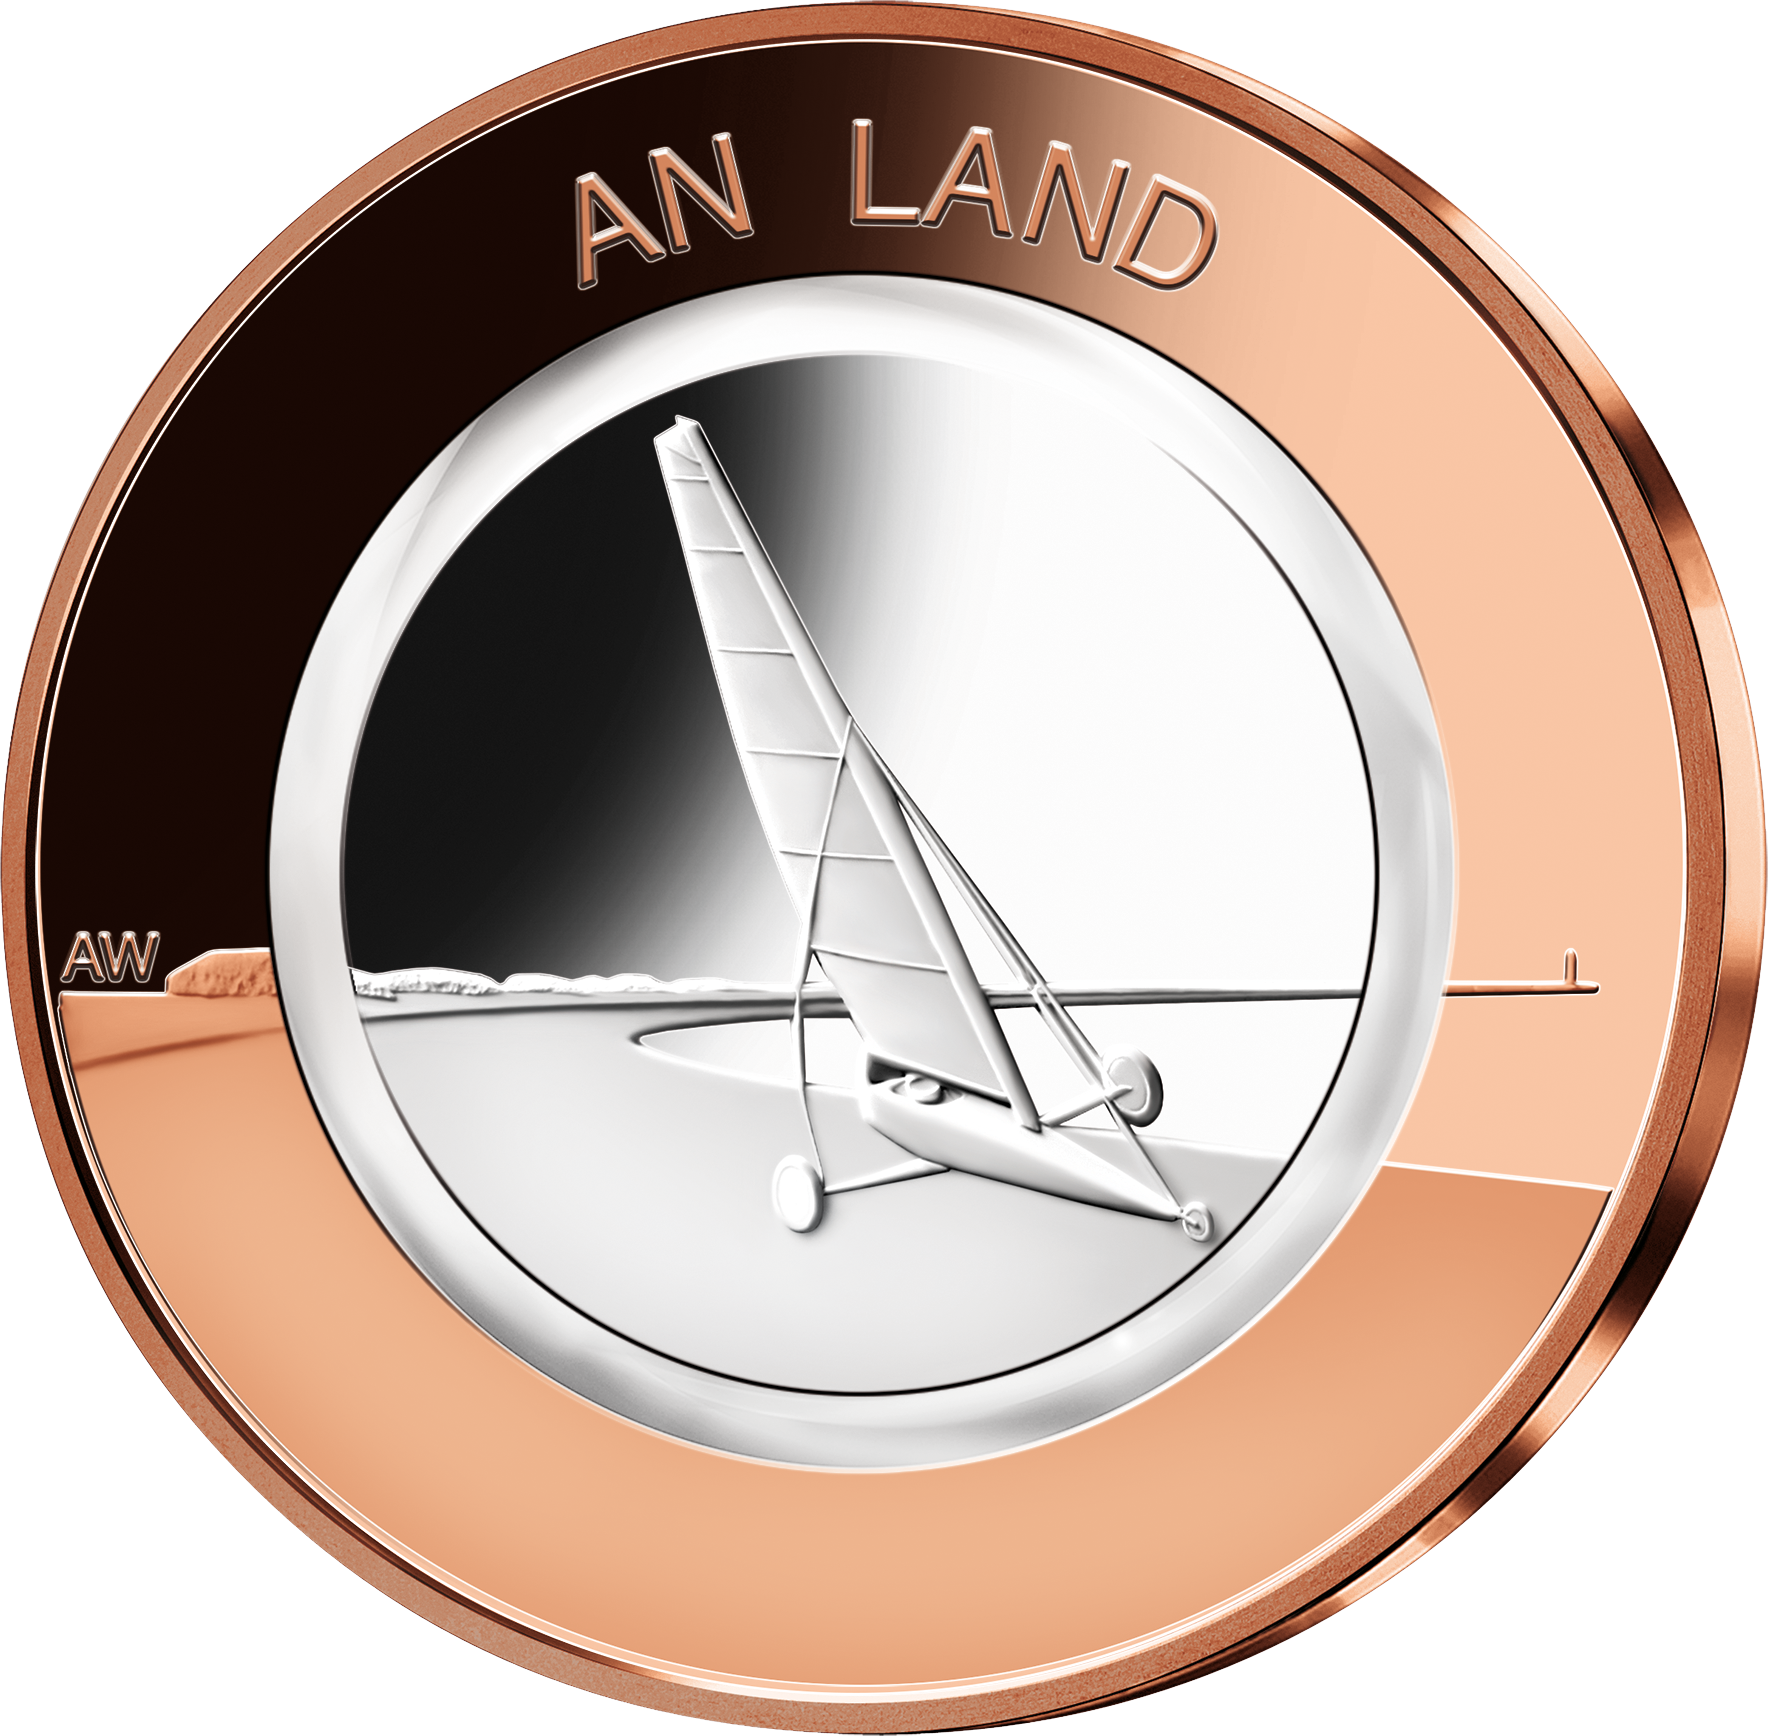 5 x 10 Euro Münze BRD An Land 2020 ADFGJ, PP - münzen-gü0